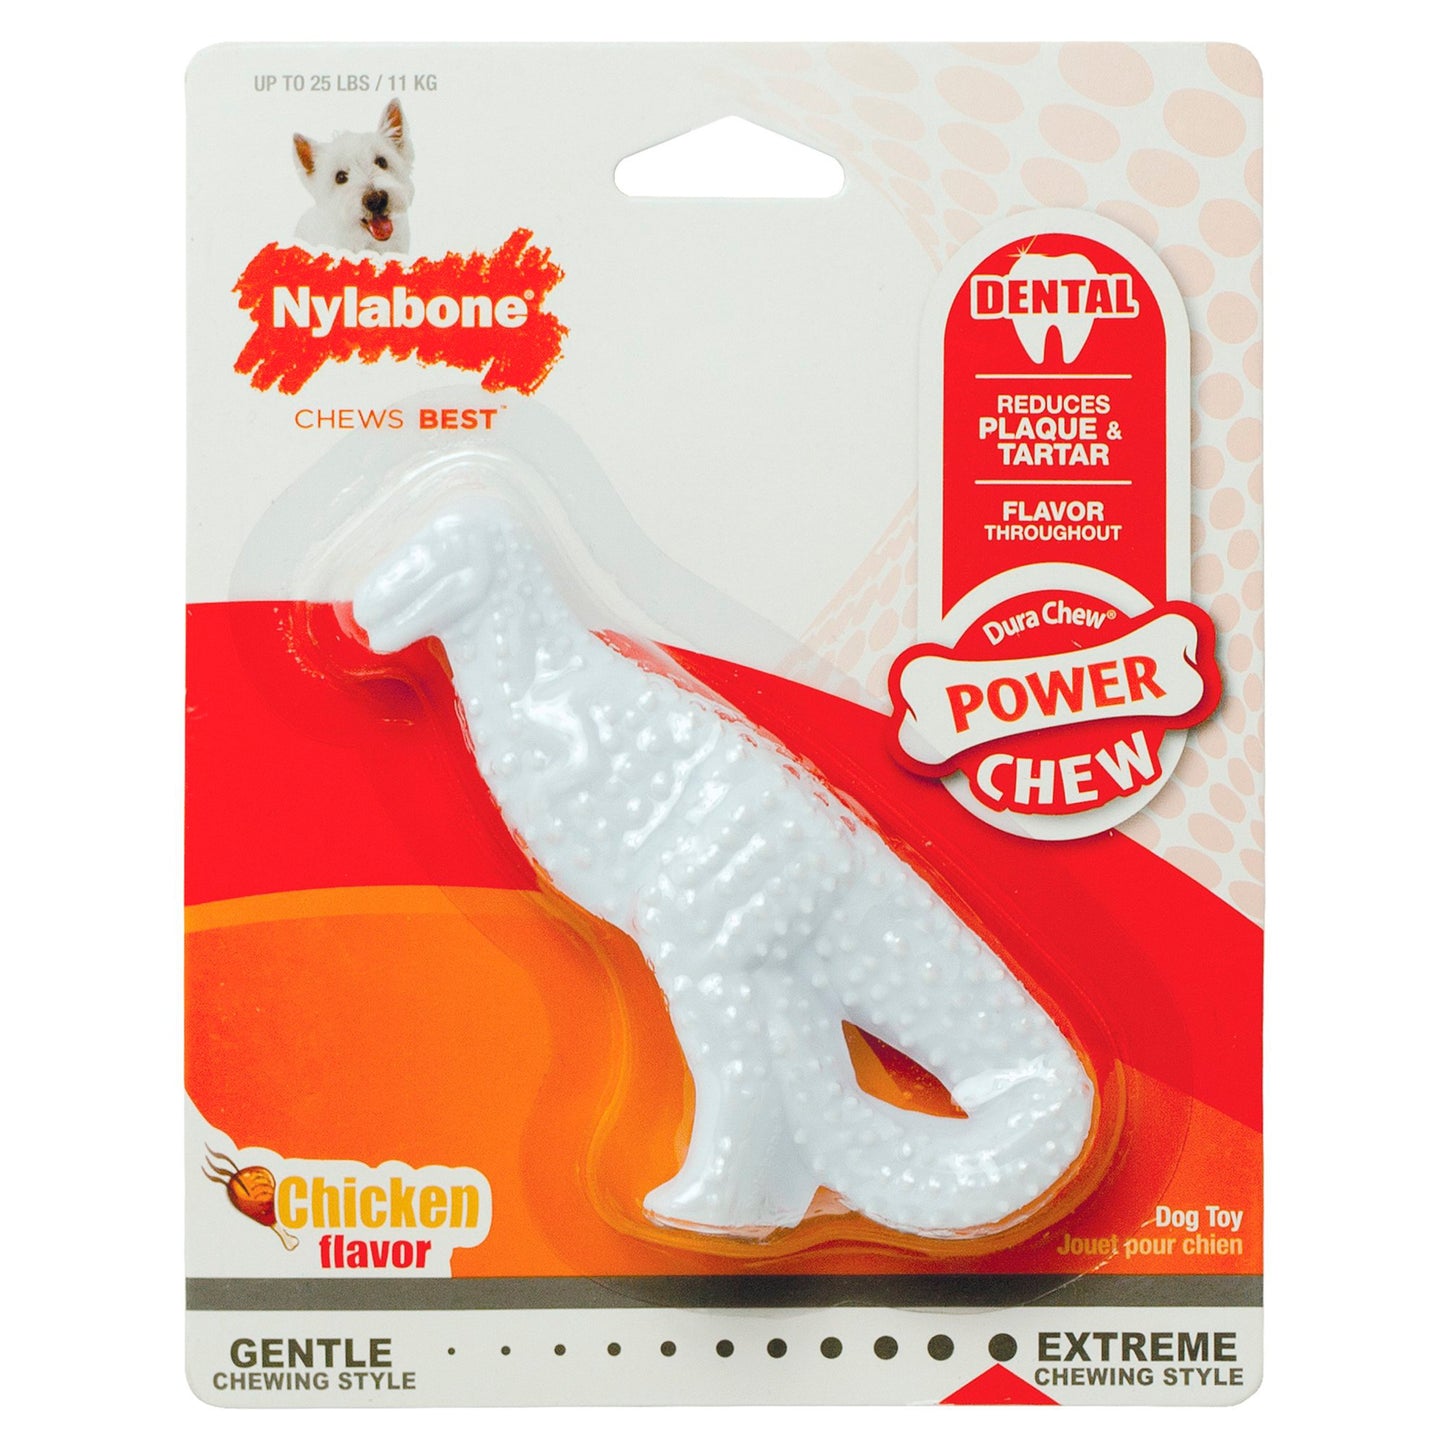 Nylabone Dental Dinosaur Power Chew Durable Dog Toy Chicken Flavor Small/Regular - Up To 25 lb, Nylabone